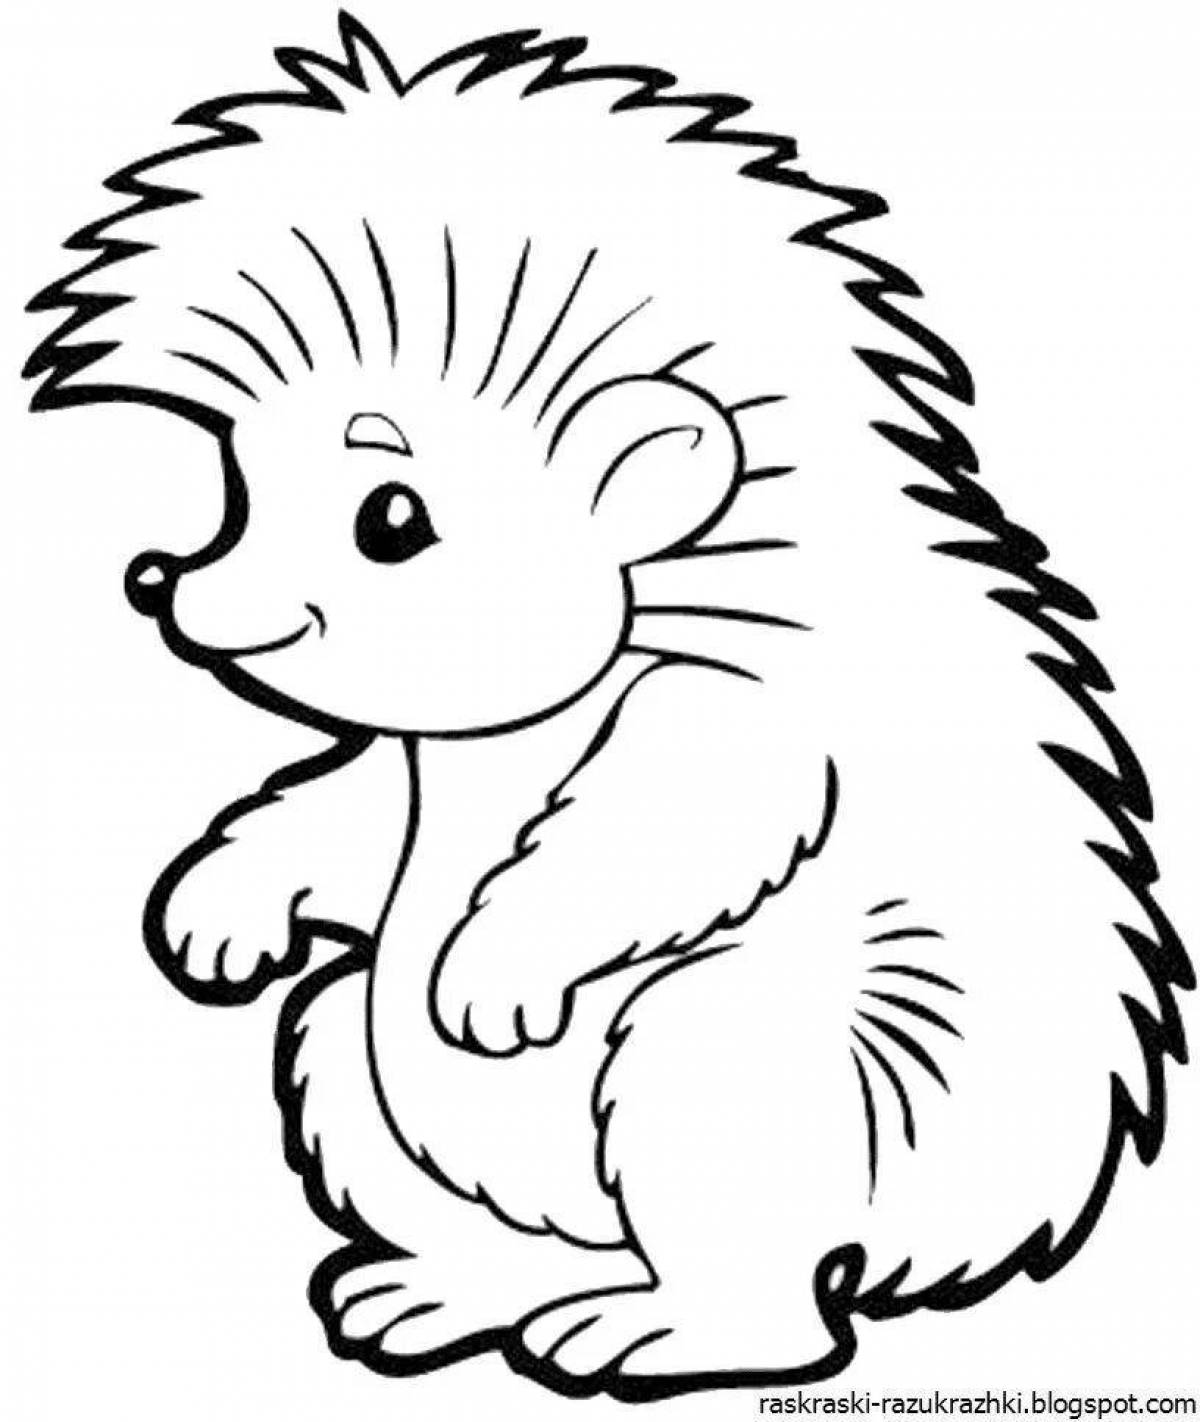 Drawing of a happy hedgehog